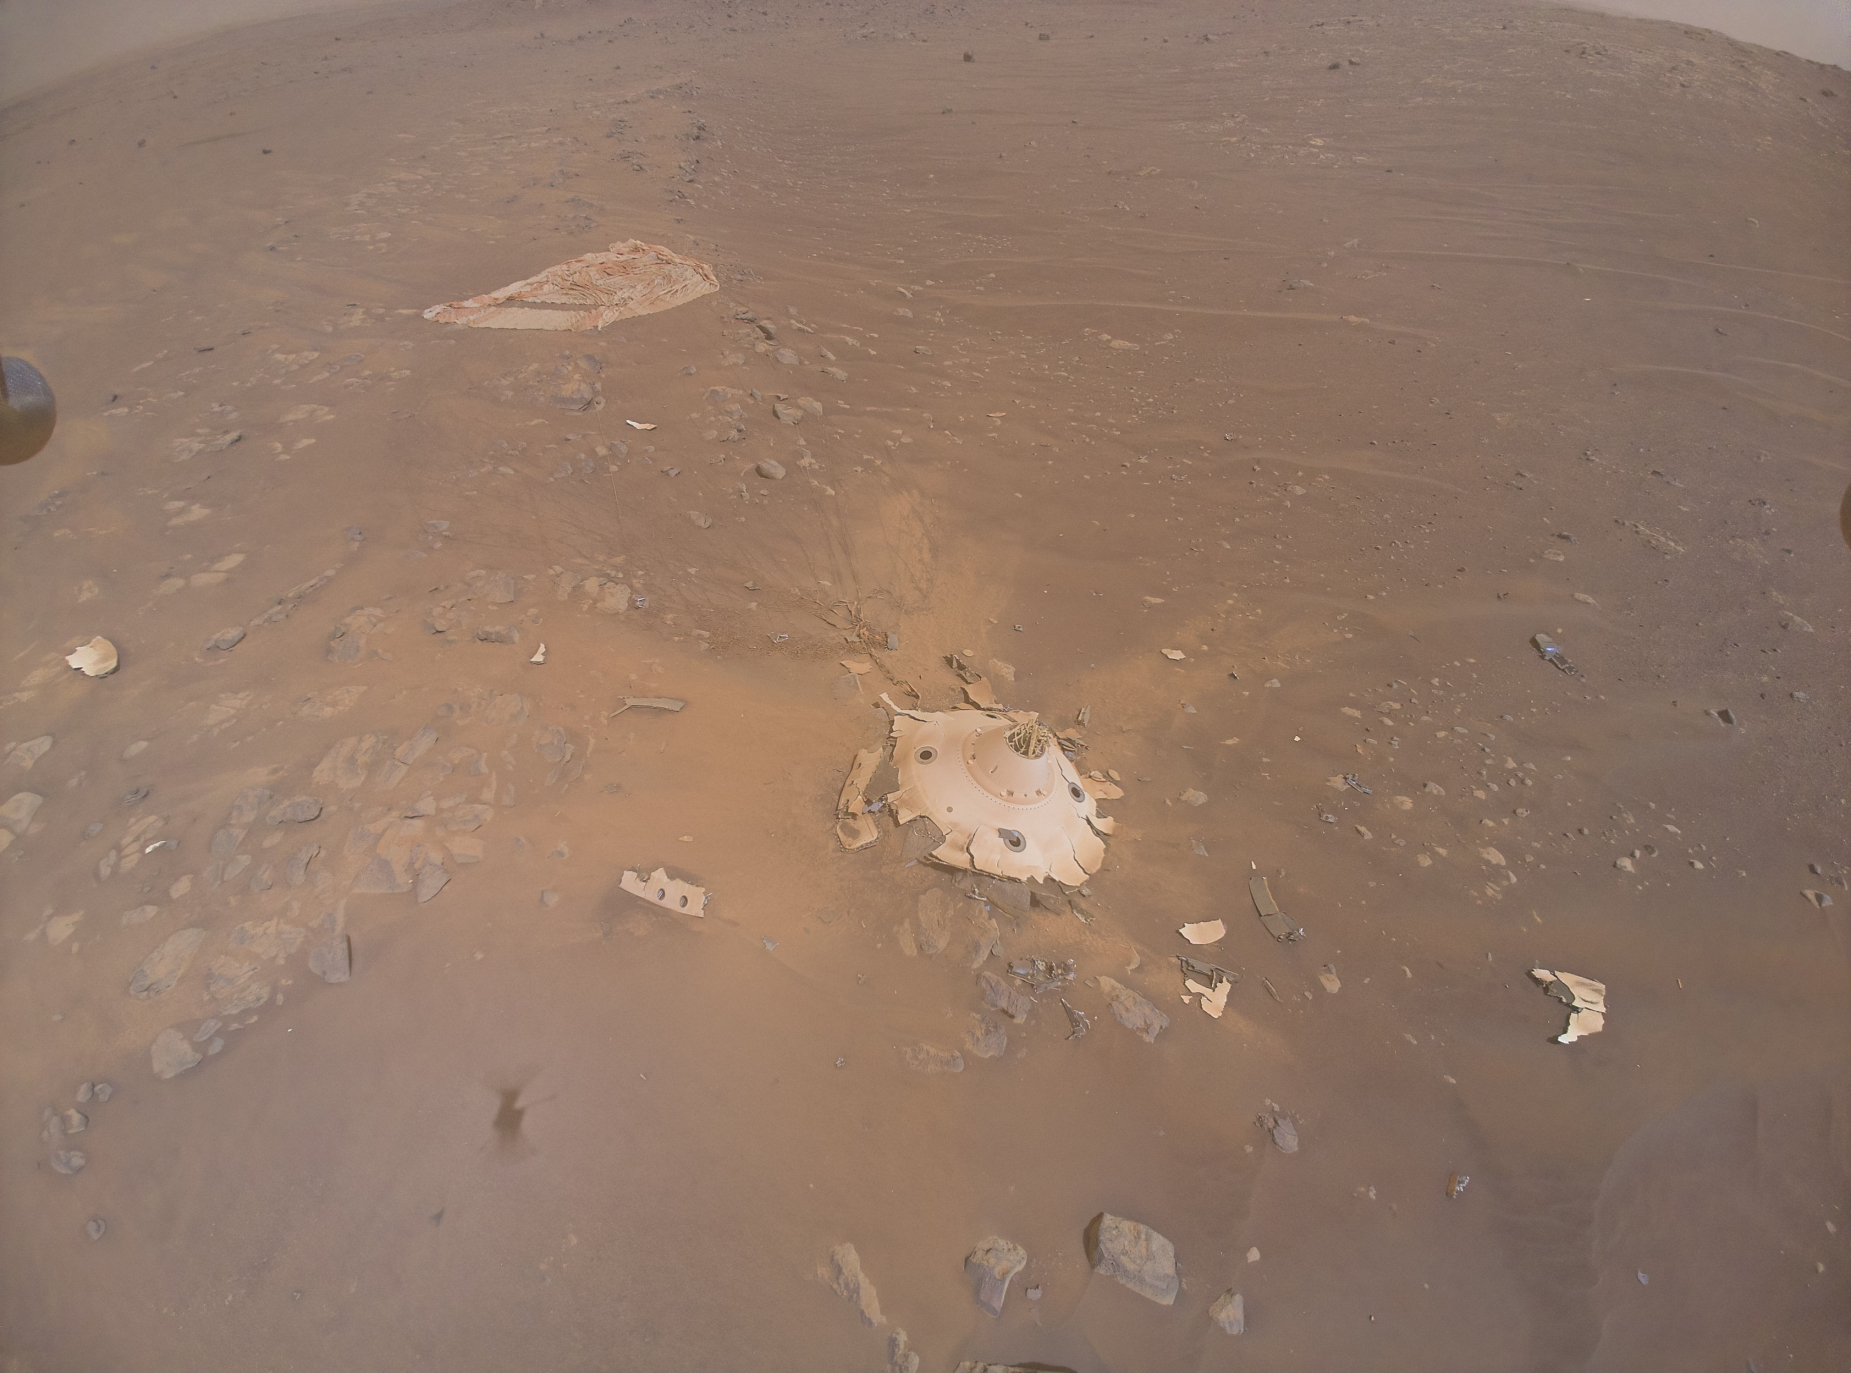 Krhotine i ostatci padobrana i stražnje školjke letjelice koja je spustila NASA-in rover 'Perseverance' na površinu Marsa 2021. godine (©NASA-JPL,Caltech).